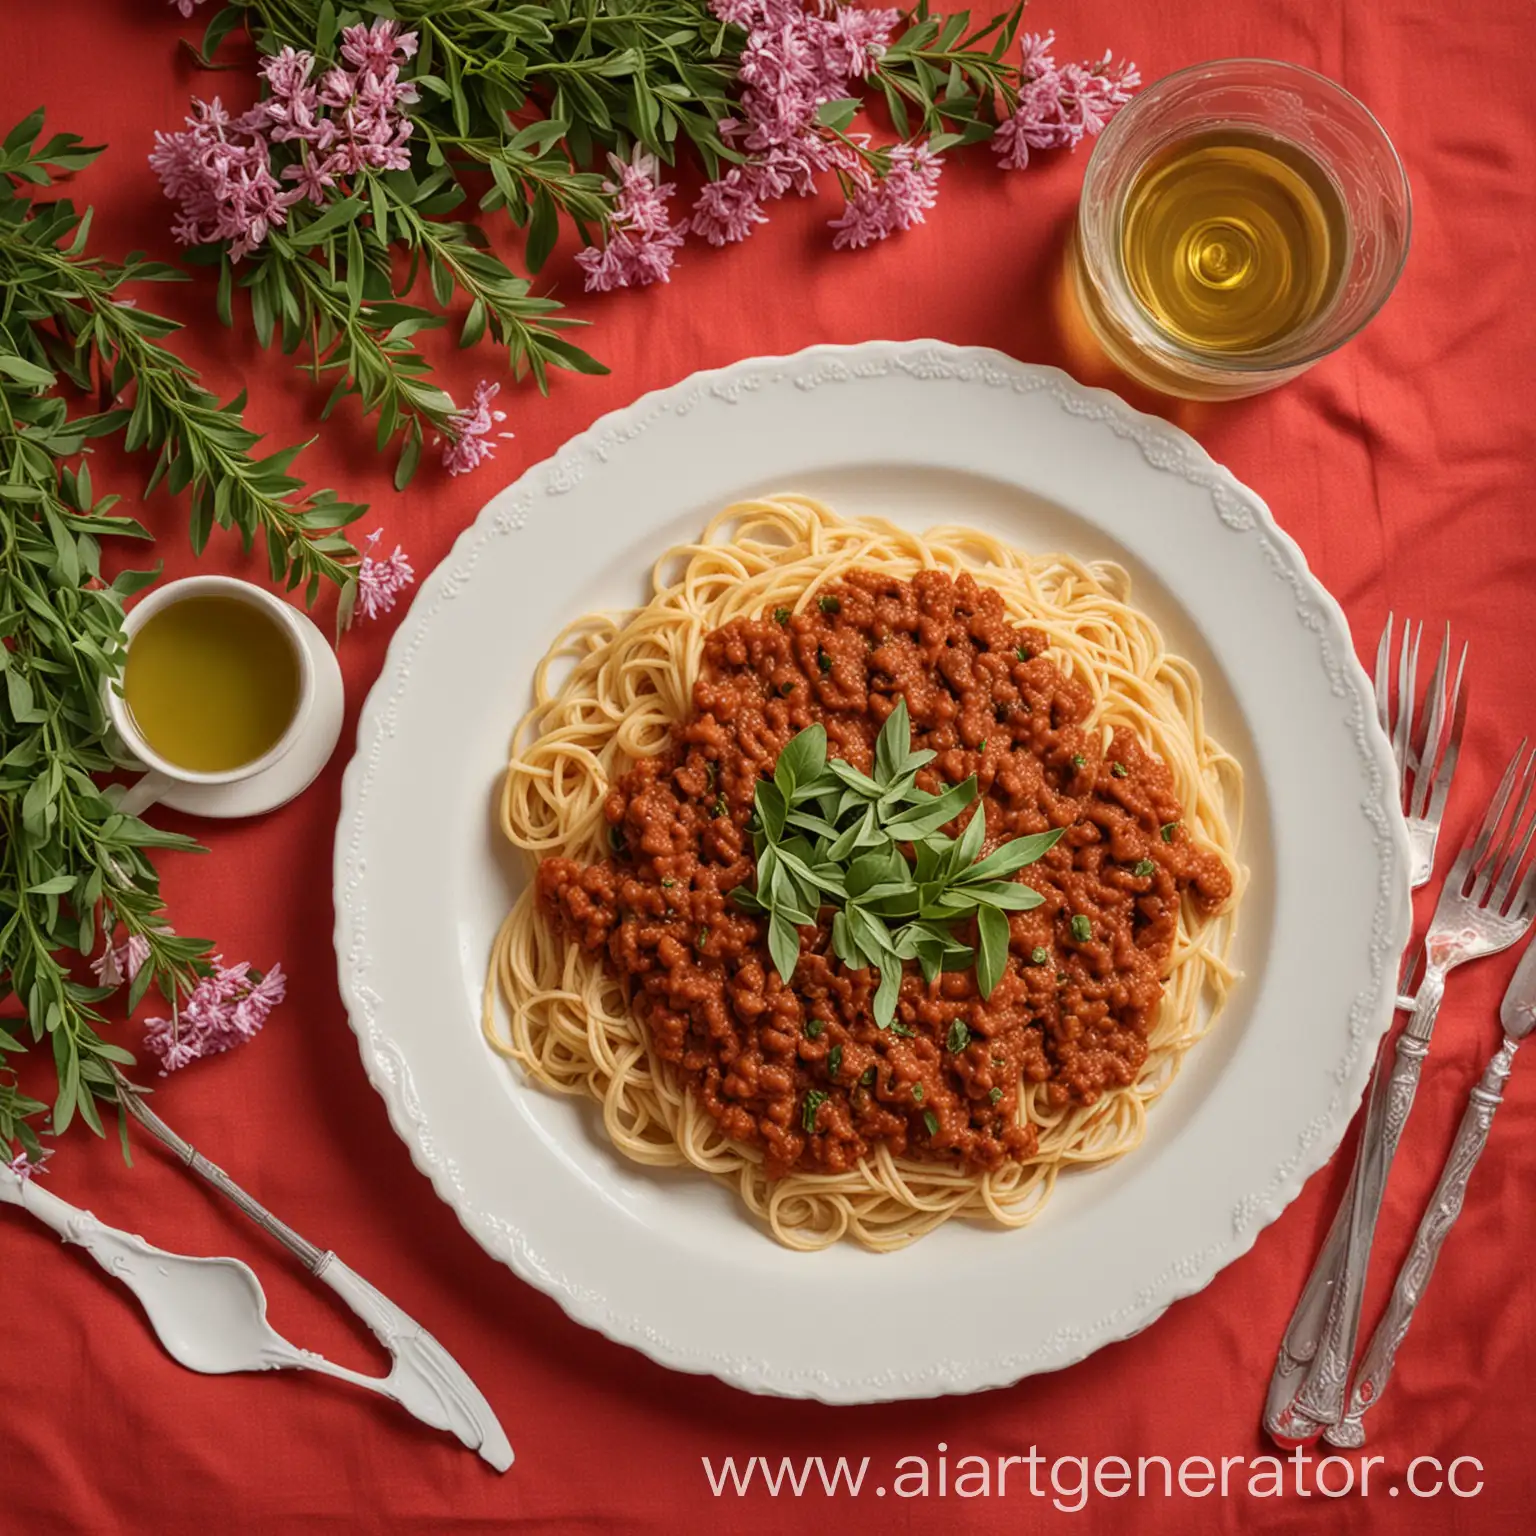 Italian-Breakfast-Spaghetti-Bolognese-and-Lilac-Accents